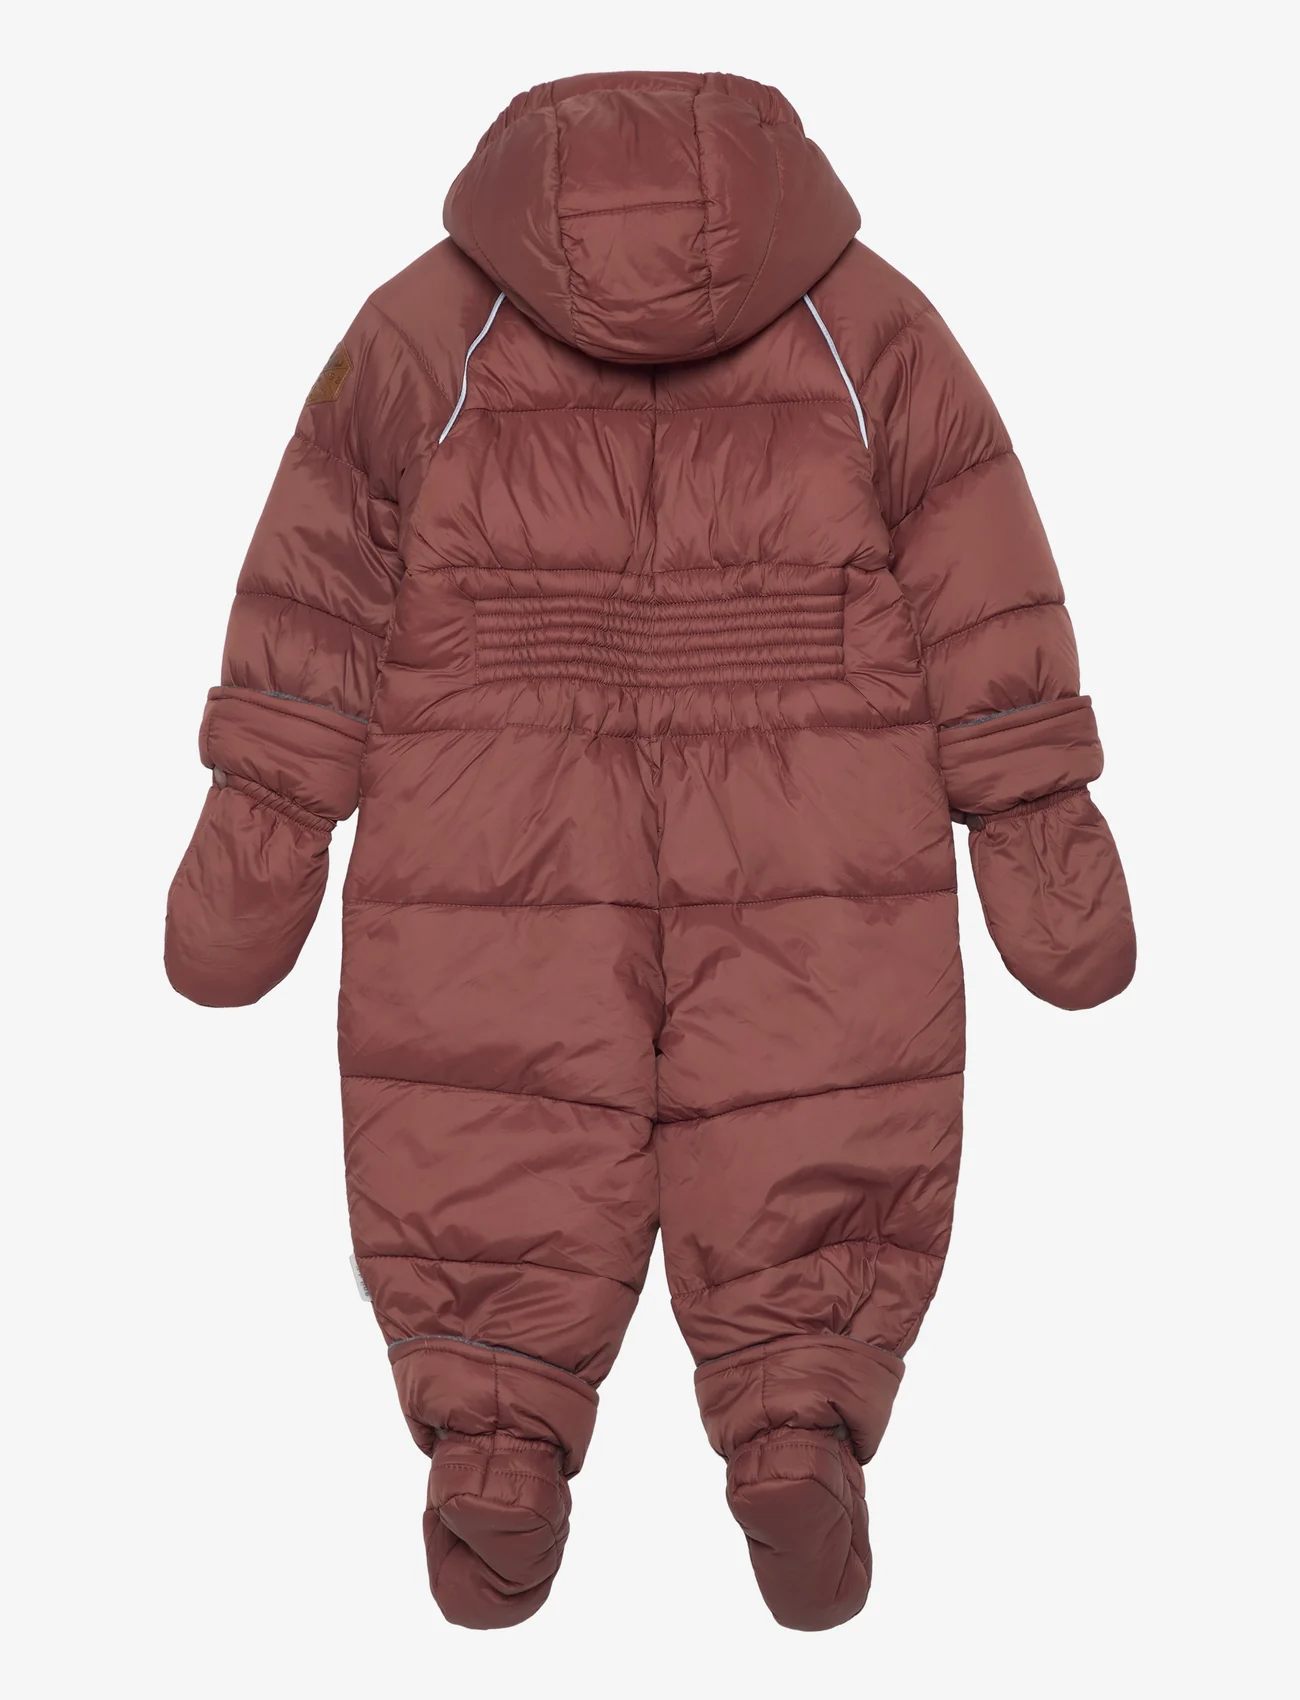 mikk-line - Puff Baby Suit w Acc Rec. - vinterdress - mink - 1